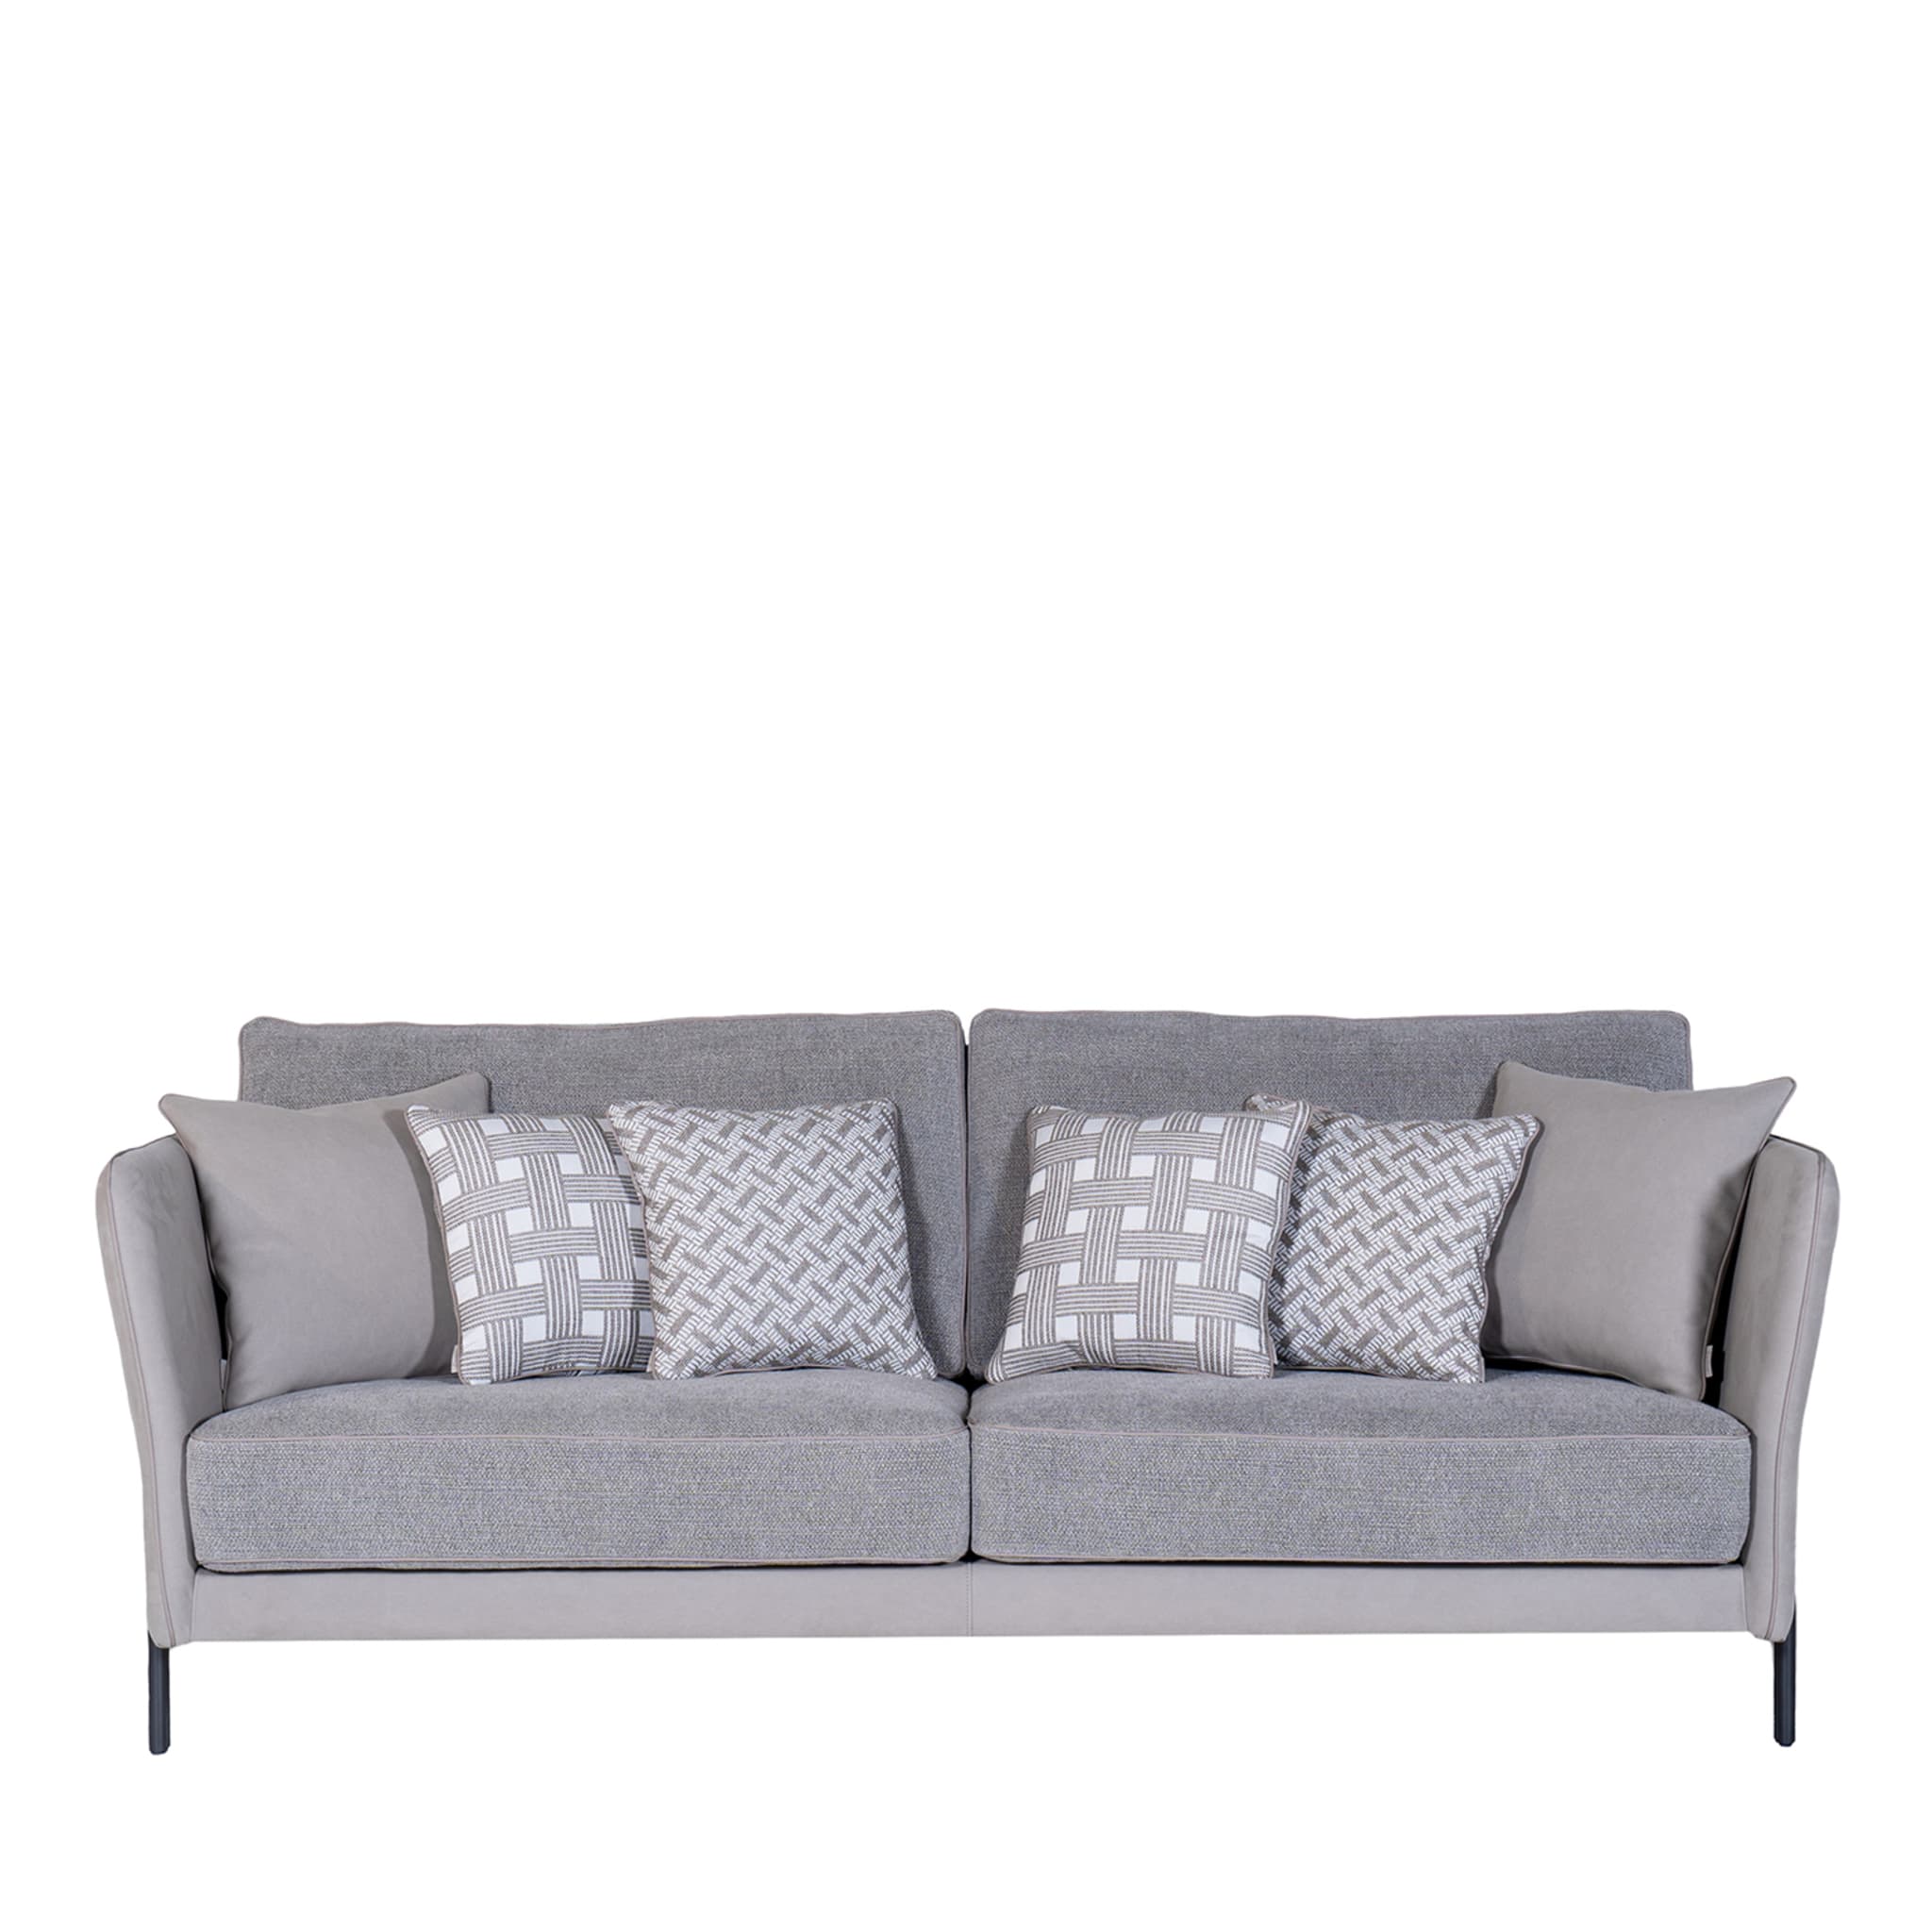 Universal Gray Sofa by Marco & Giulio Mantellassi  - Main view